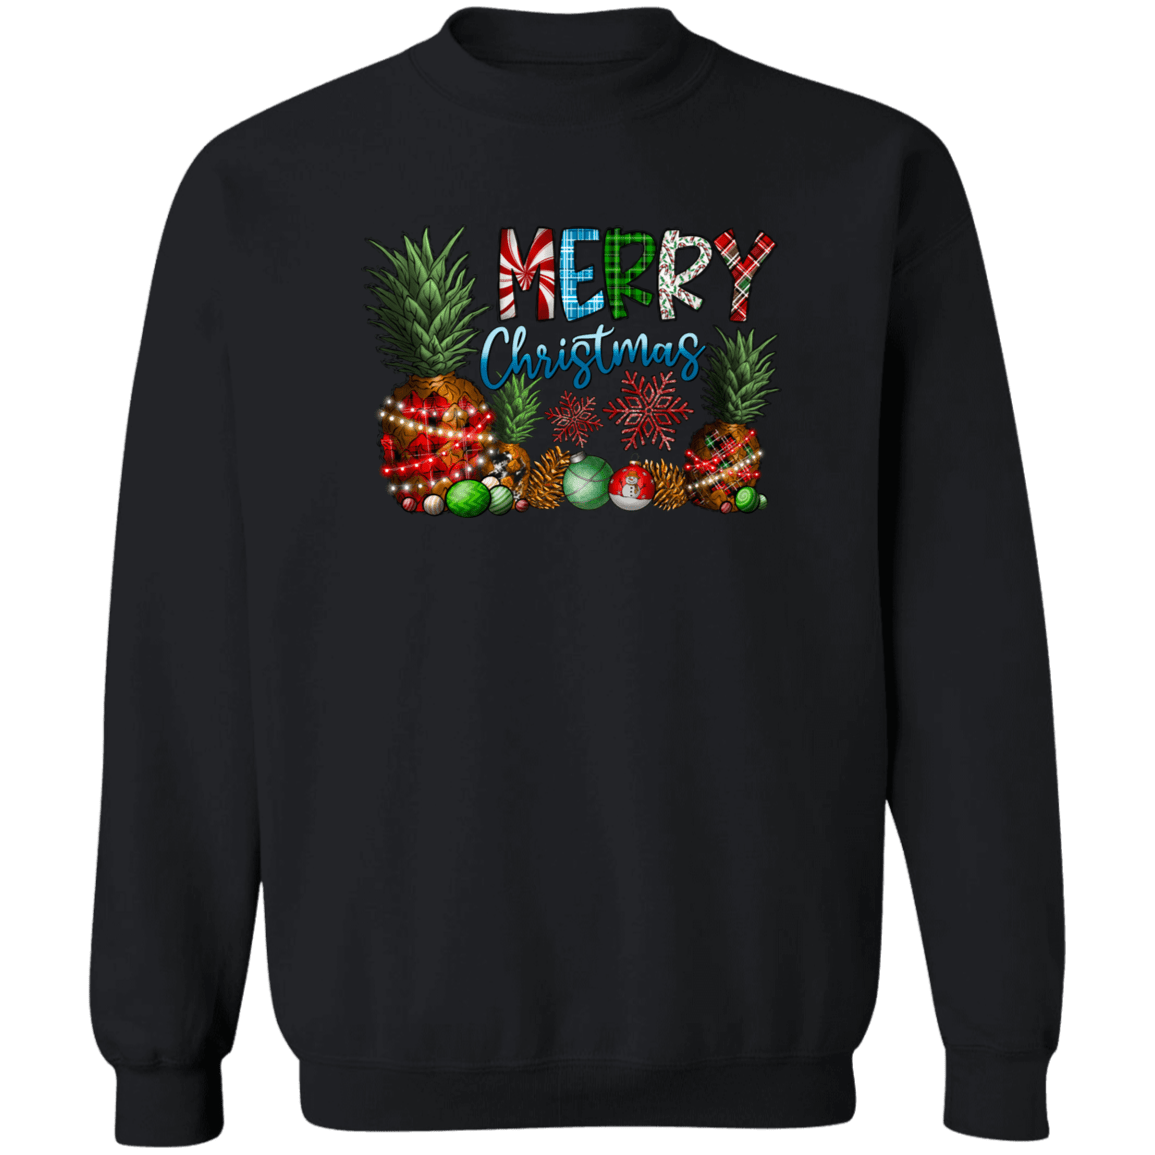 Merry Christmas Crewneck Pullover Sweatshirt